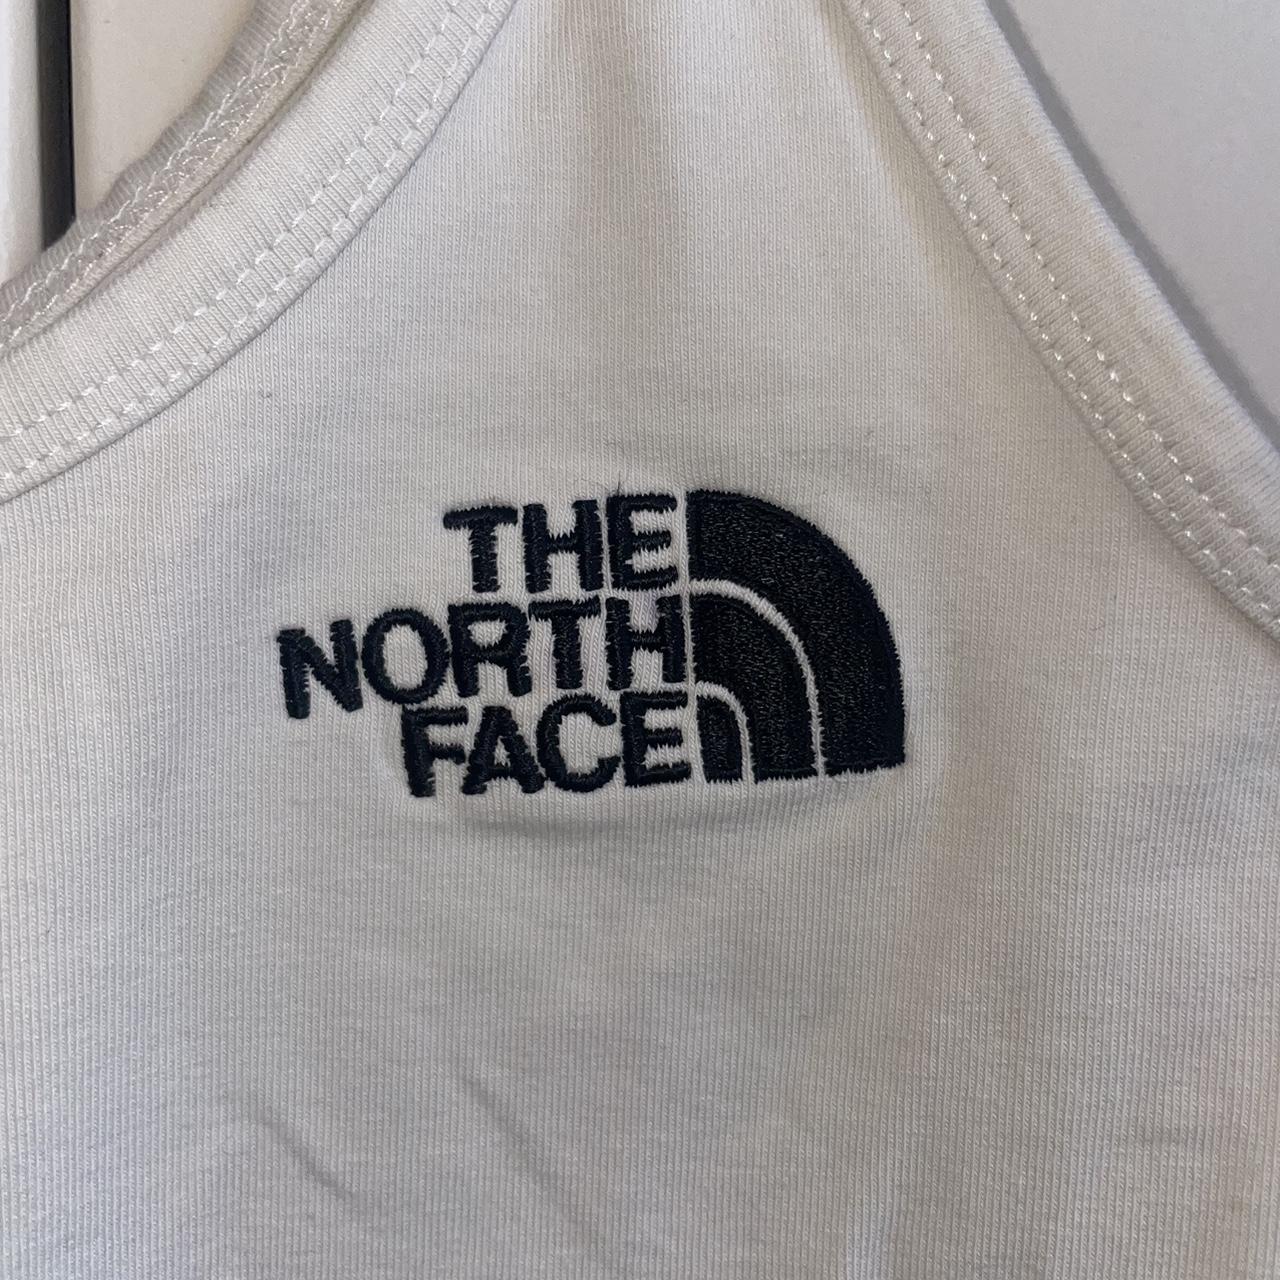 North face tank top Size S #northface #asos... - Depop